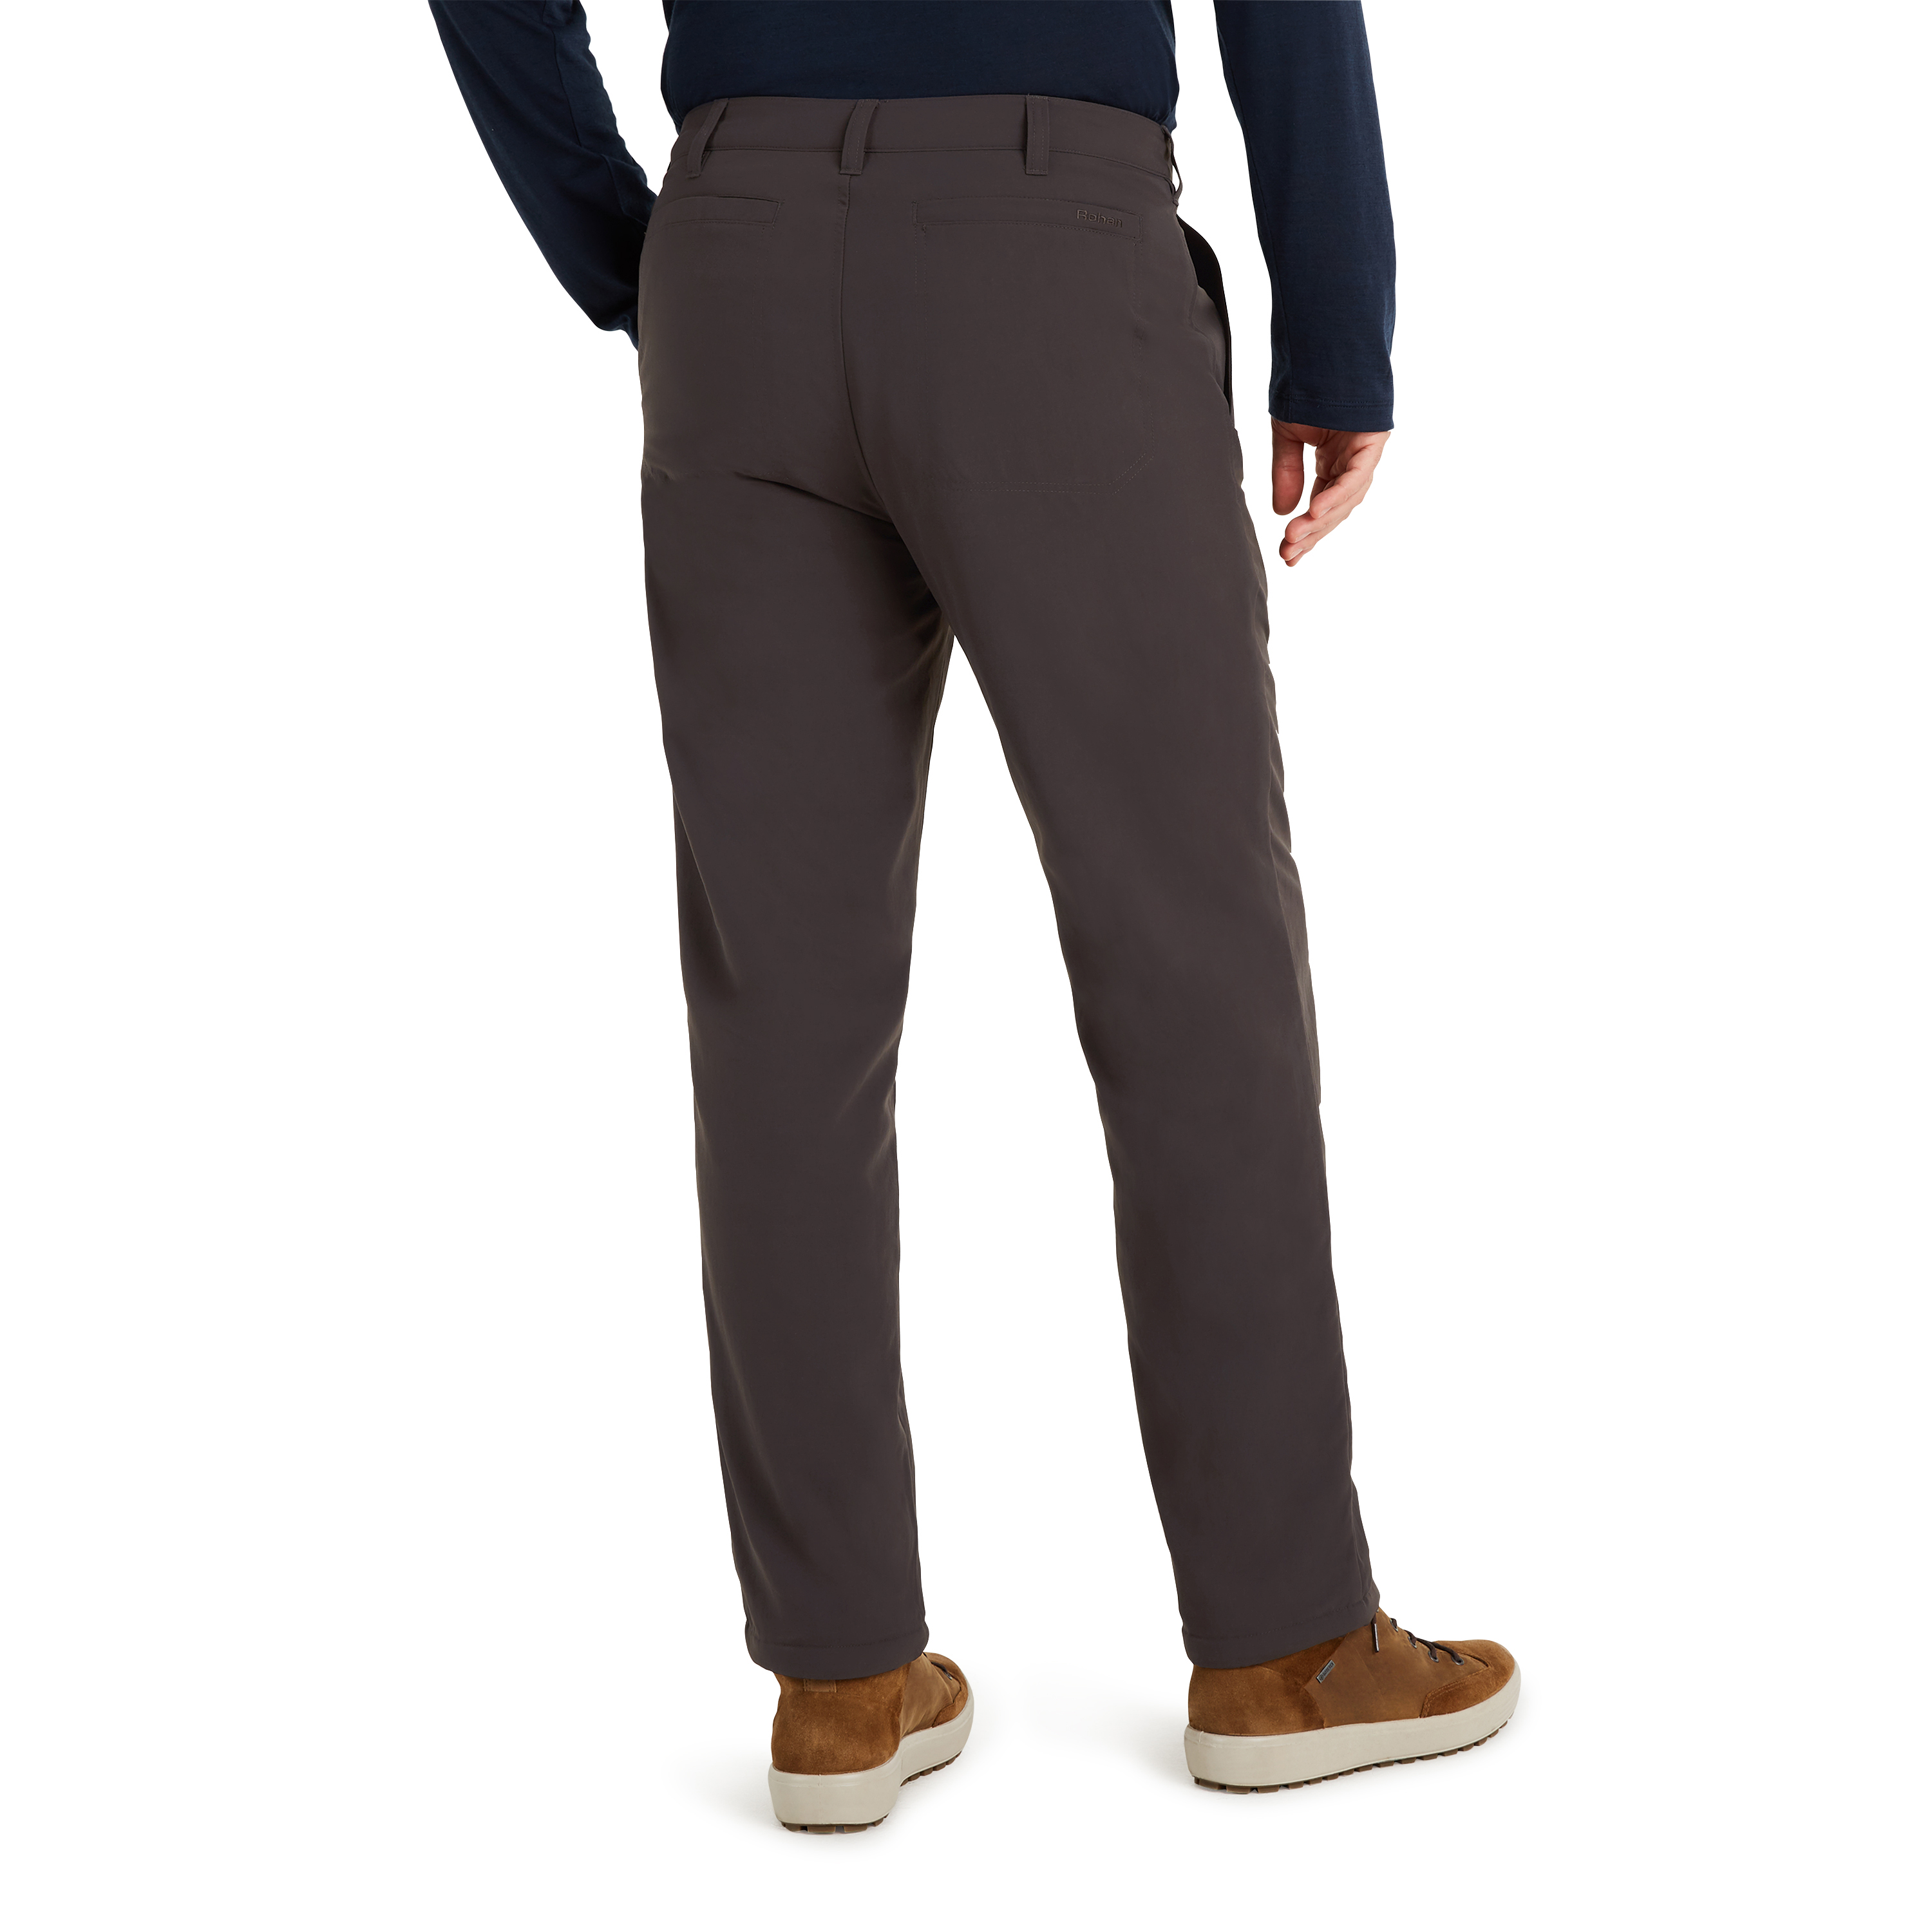 Rohan Fusion Mens Technical Travel Trekking Trousers Pants Blue 36  Inseam31  eBay